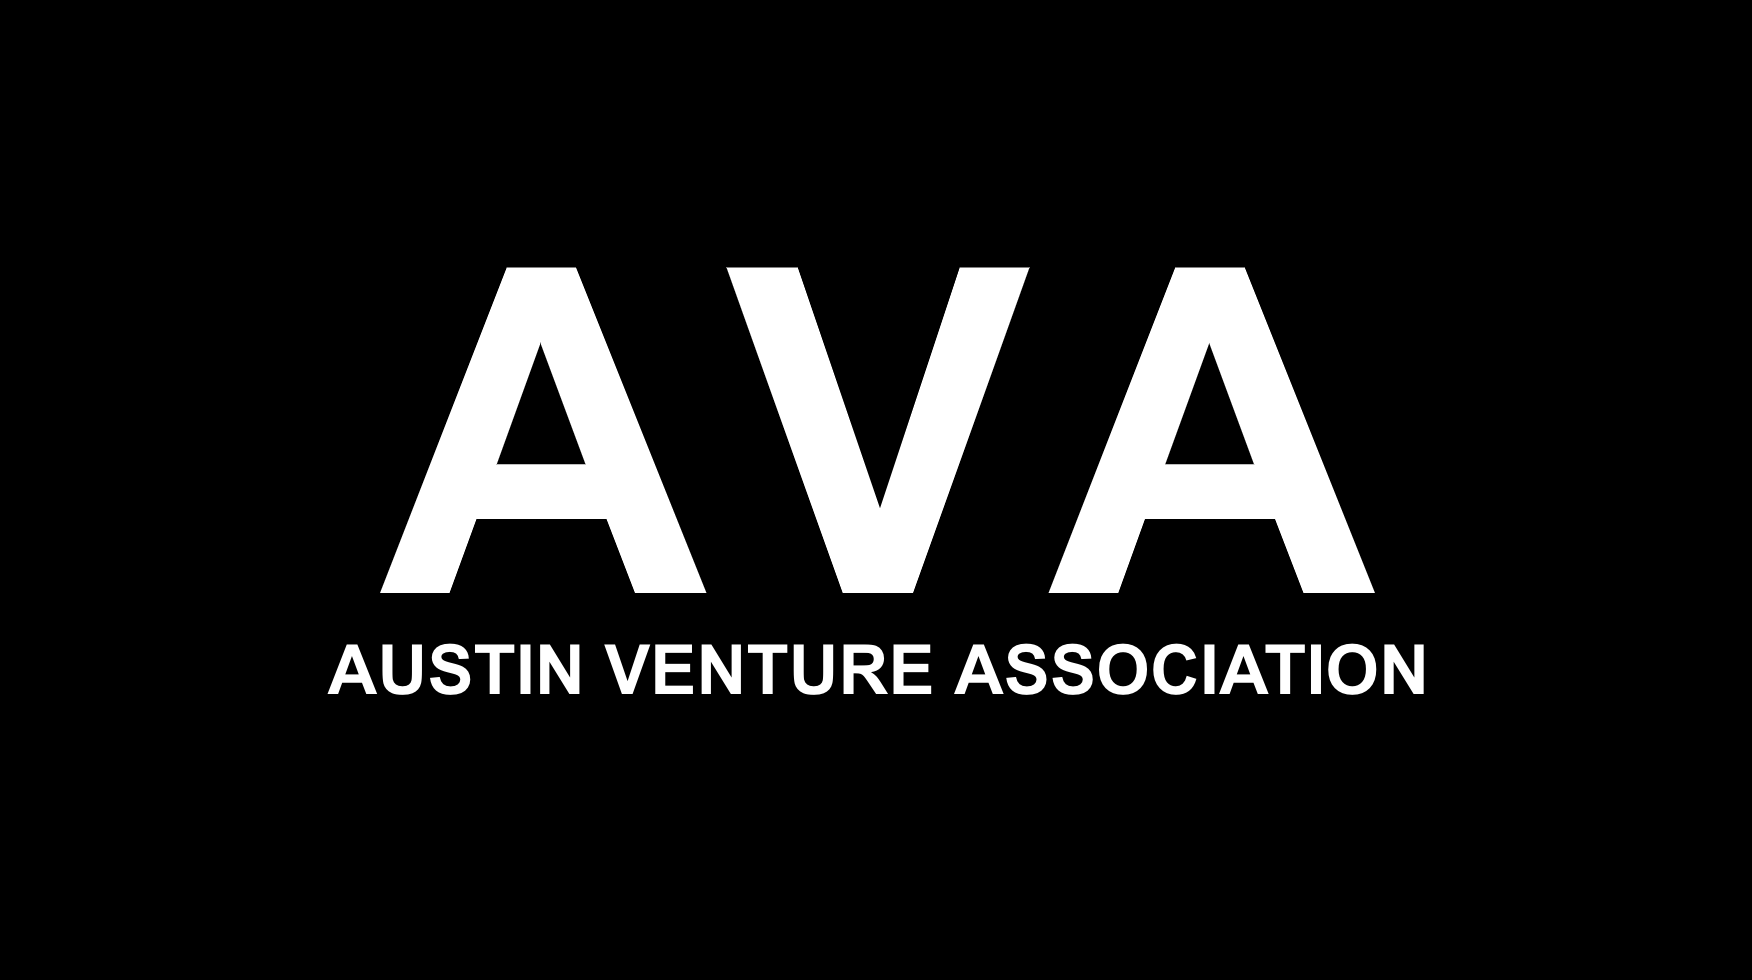 Austin Venture Association logo